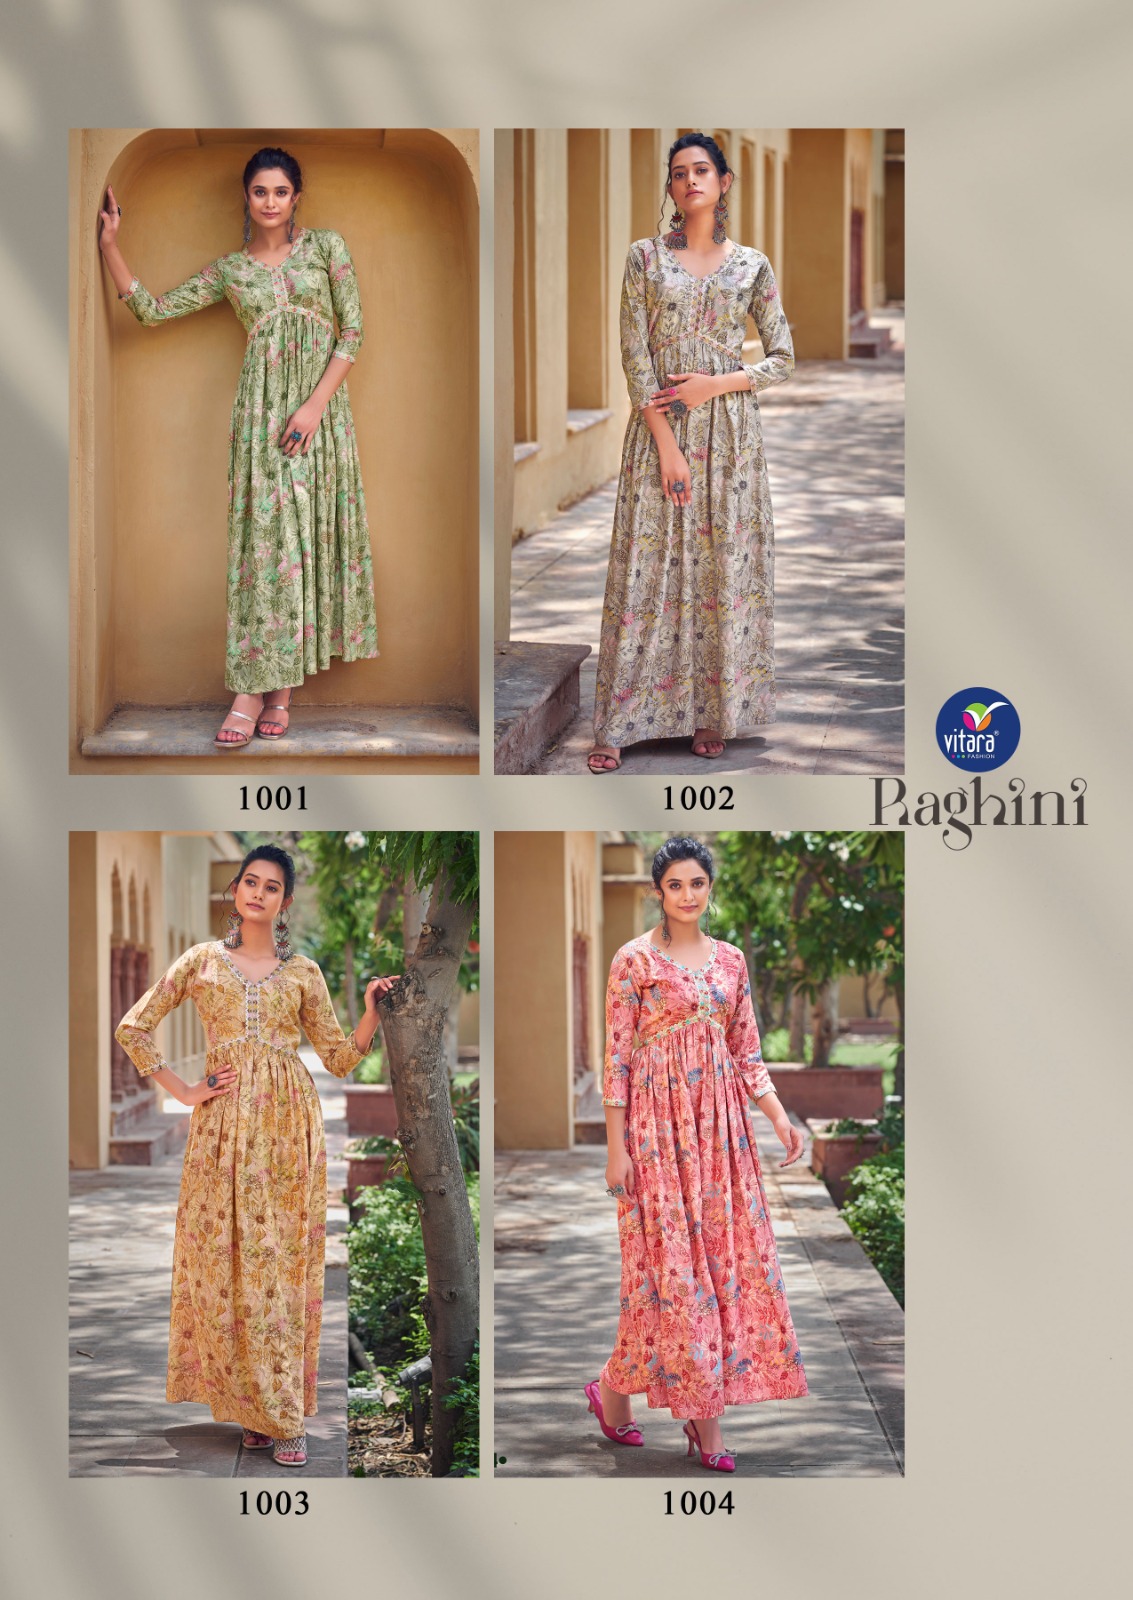 Vitara Fashion Raghini 1001-1004